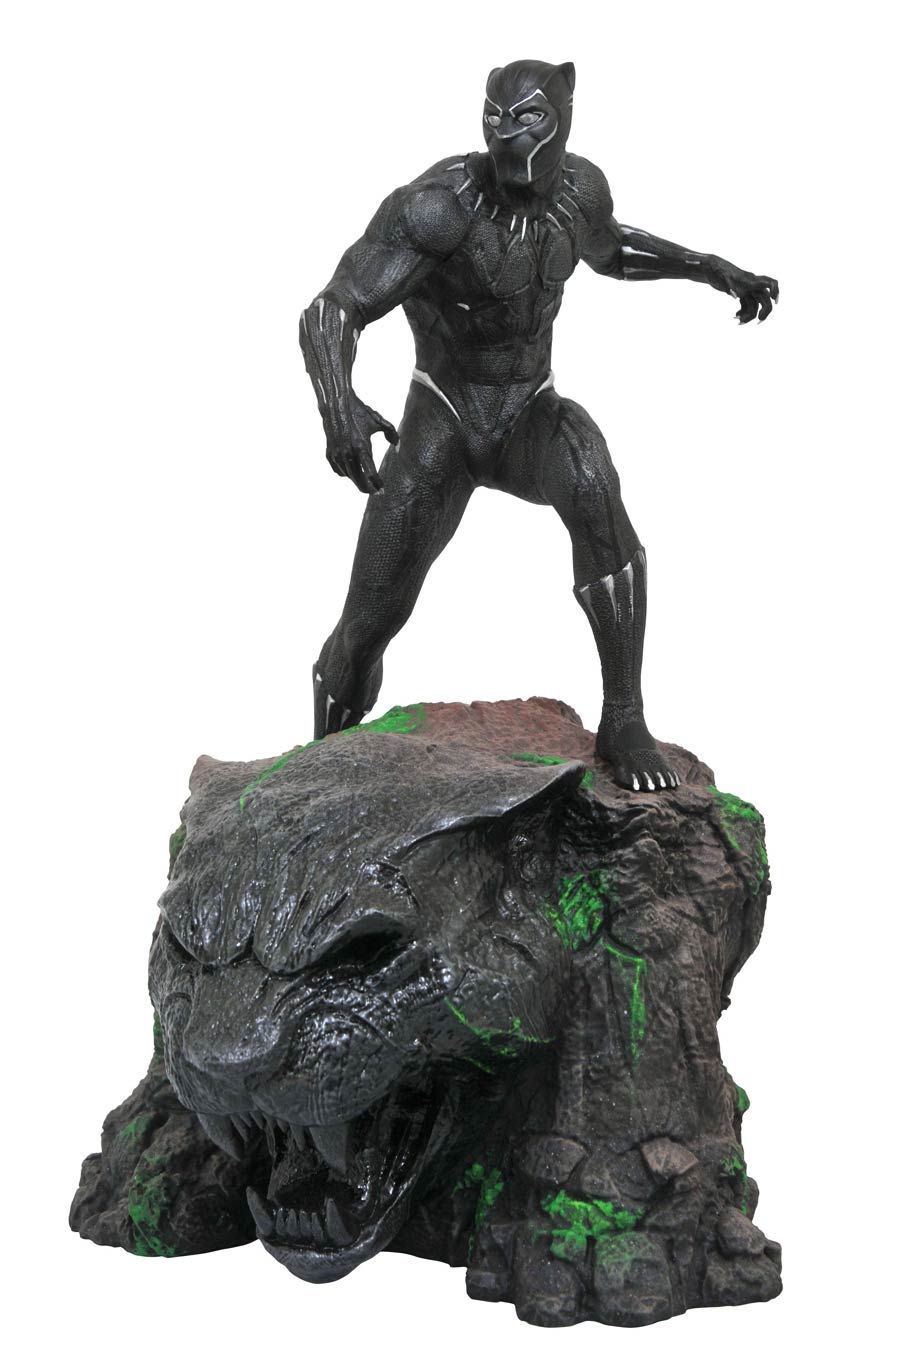 Marvel Movie Milestones Black Panther Statue